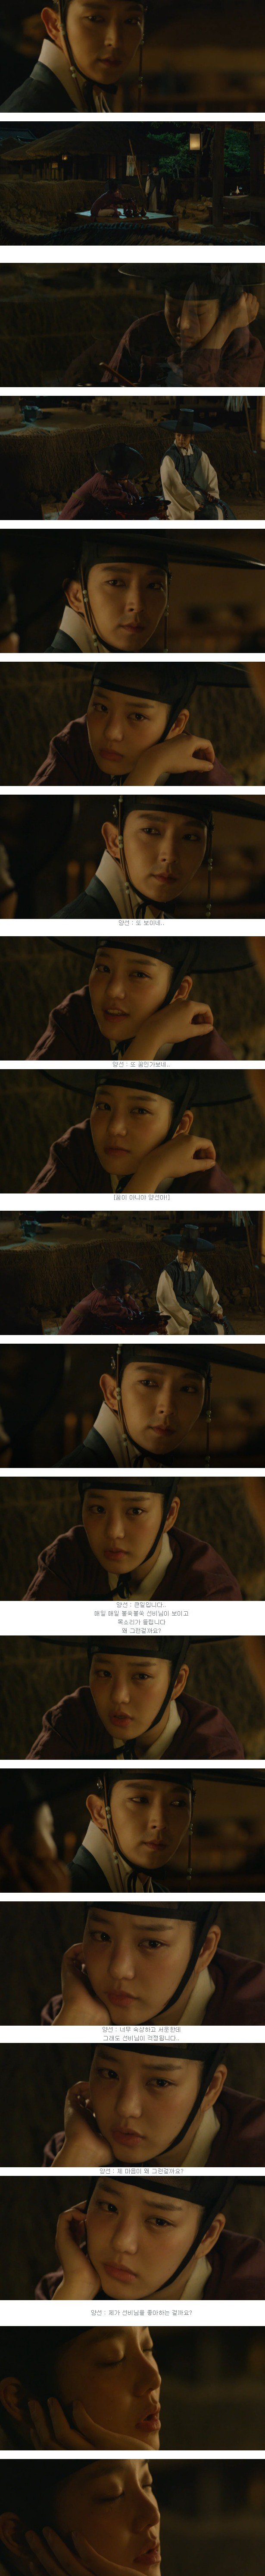 episode 5 captures for the Korean drama 'Scholar Who Walks the Night'